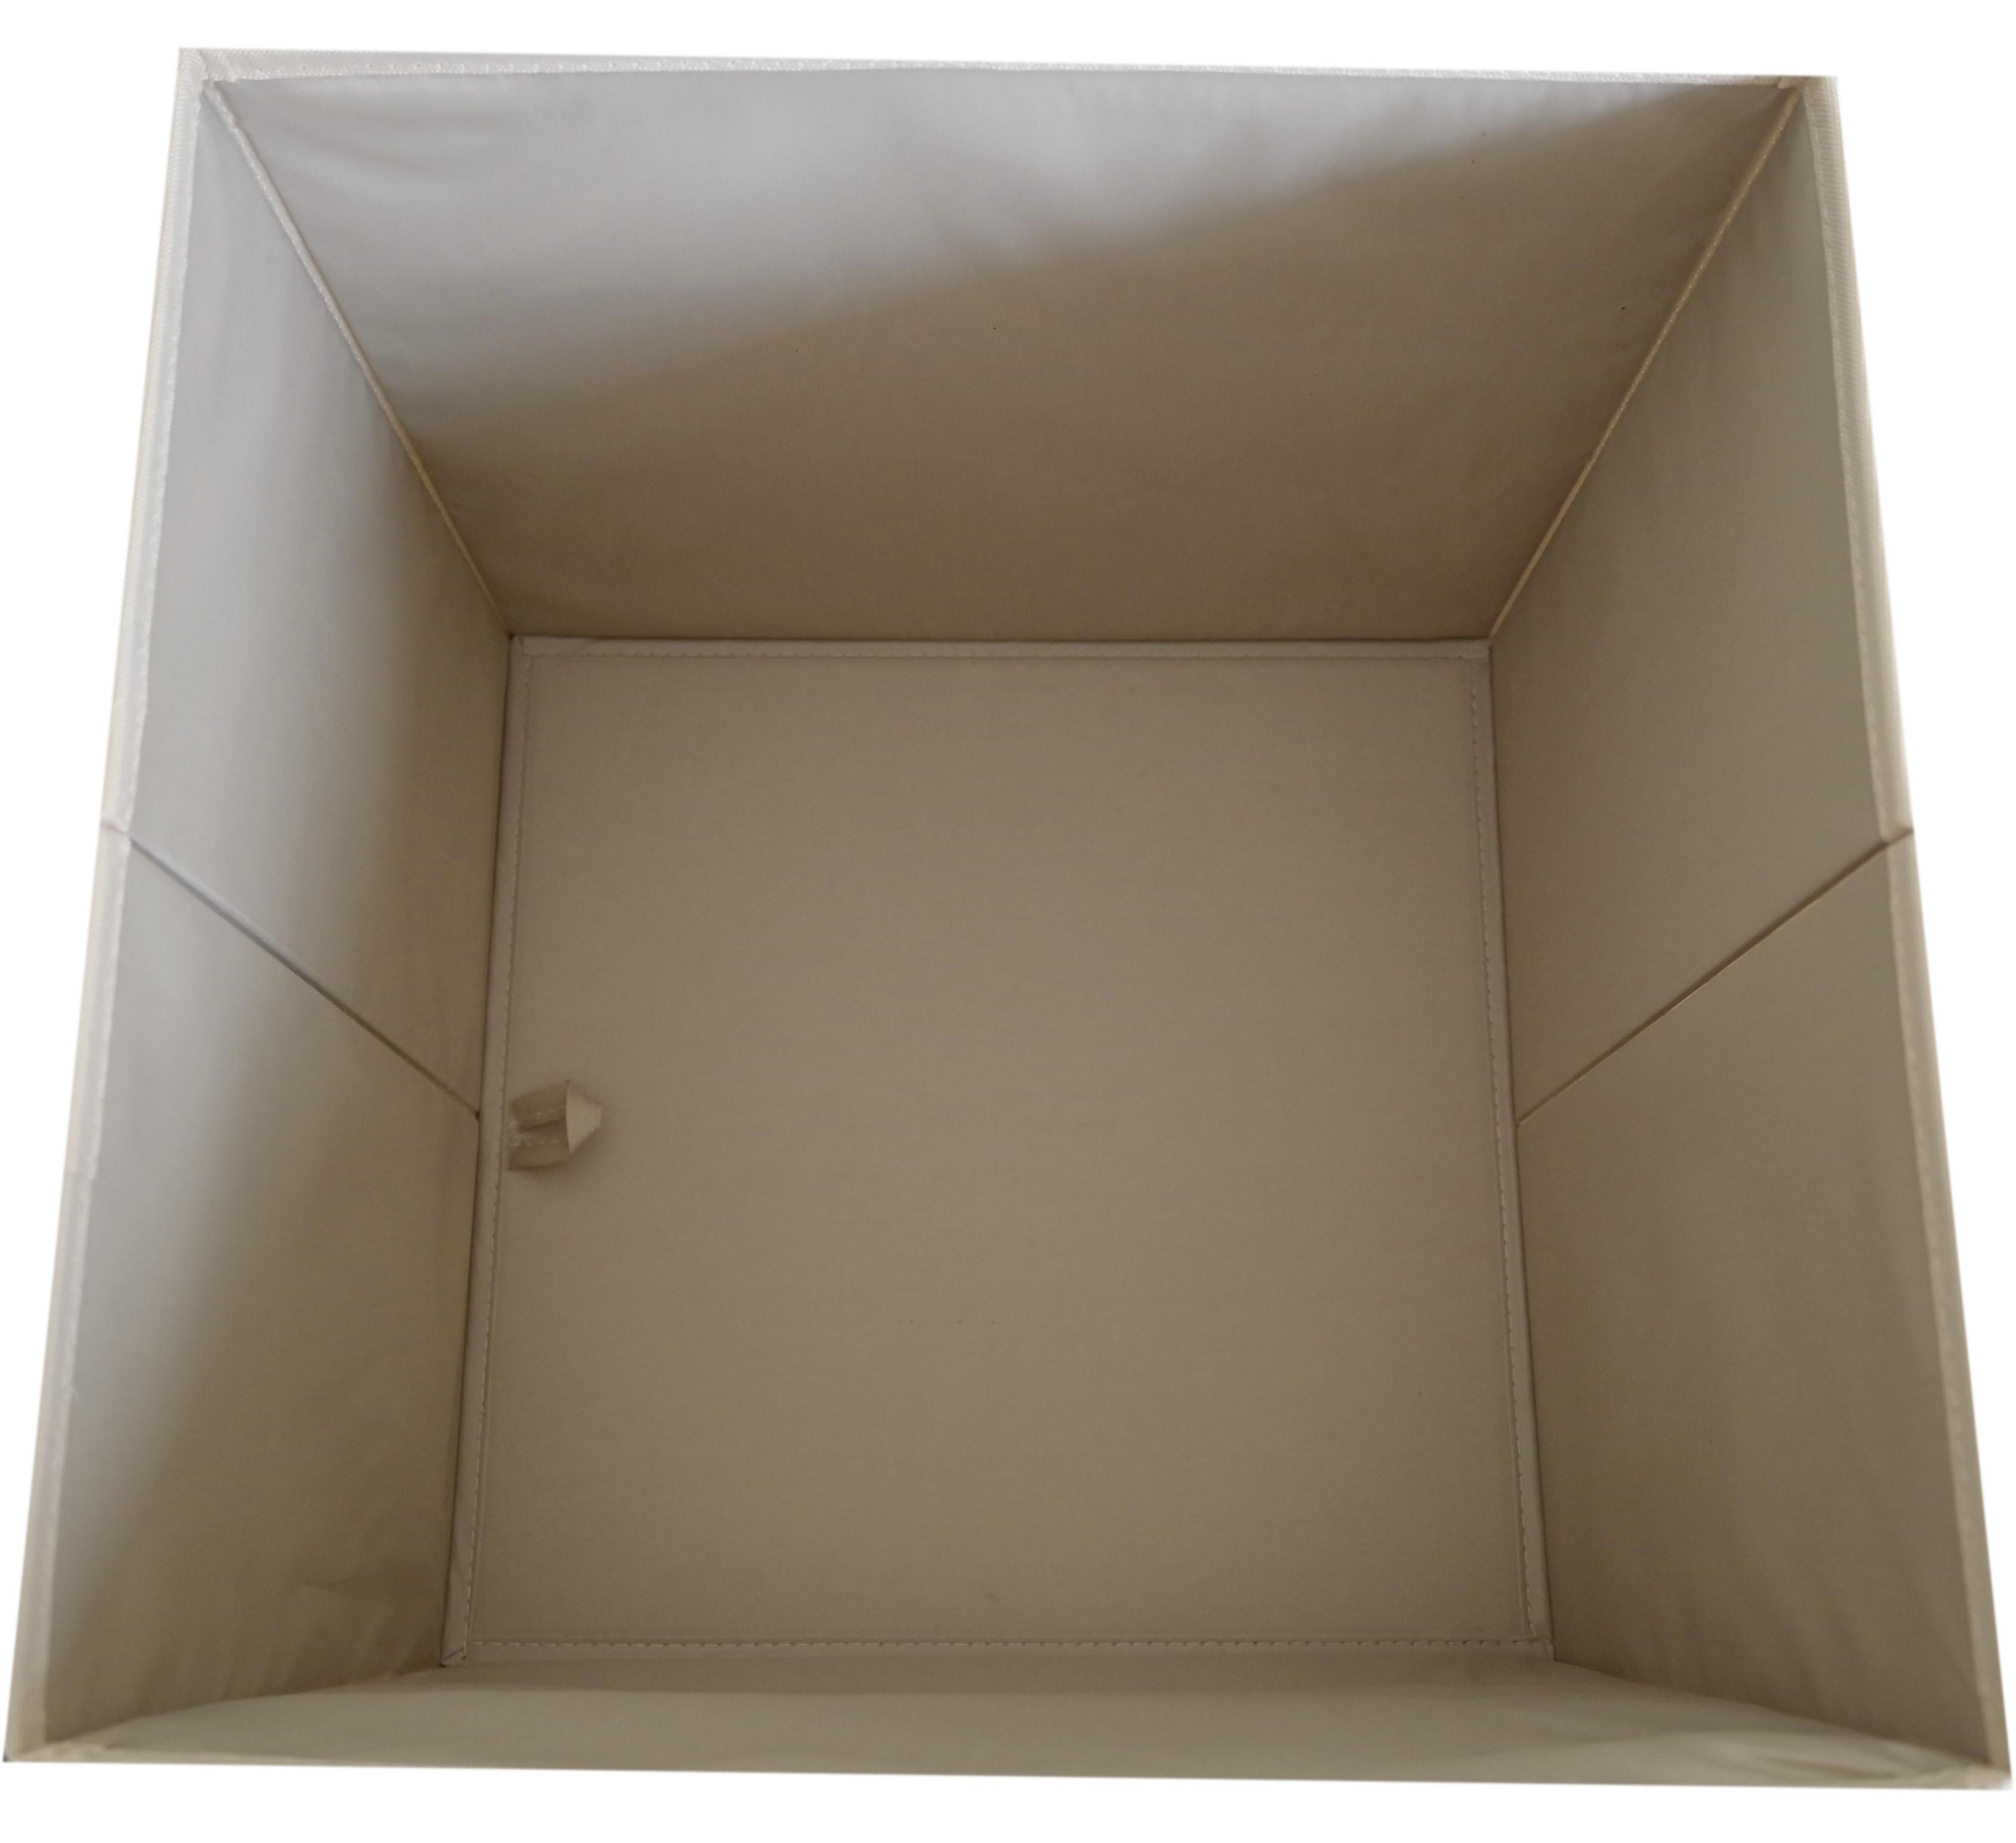 Faltbox Peter ca. 34l - Creme, Karton/Textil (33/32/33cm) - Modern Living